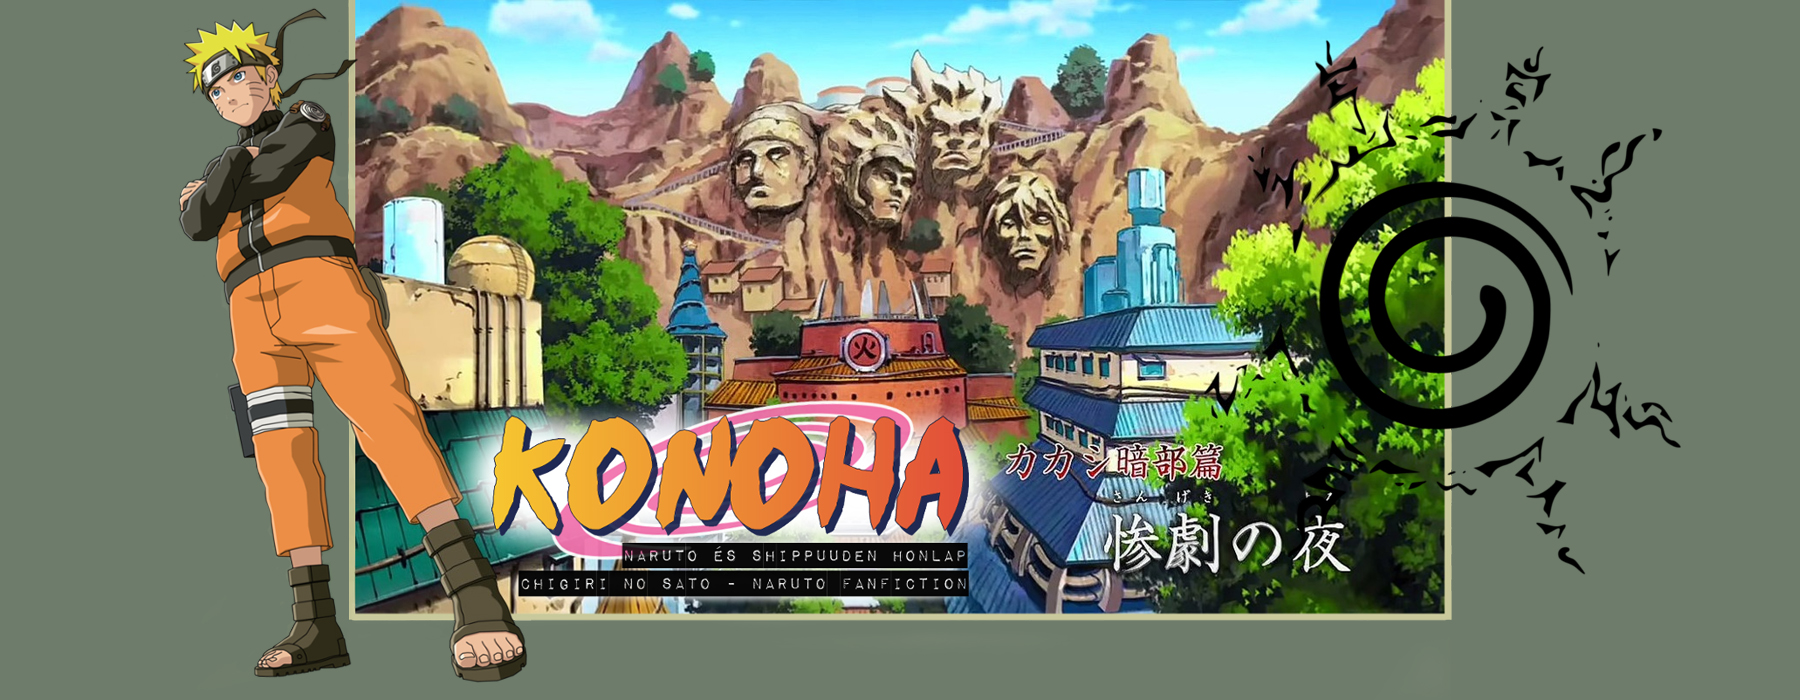 KONOHA - Naruto fan site & Fanfition